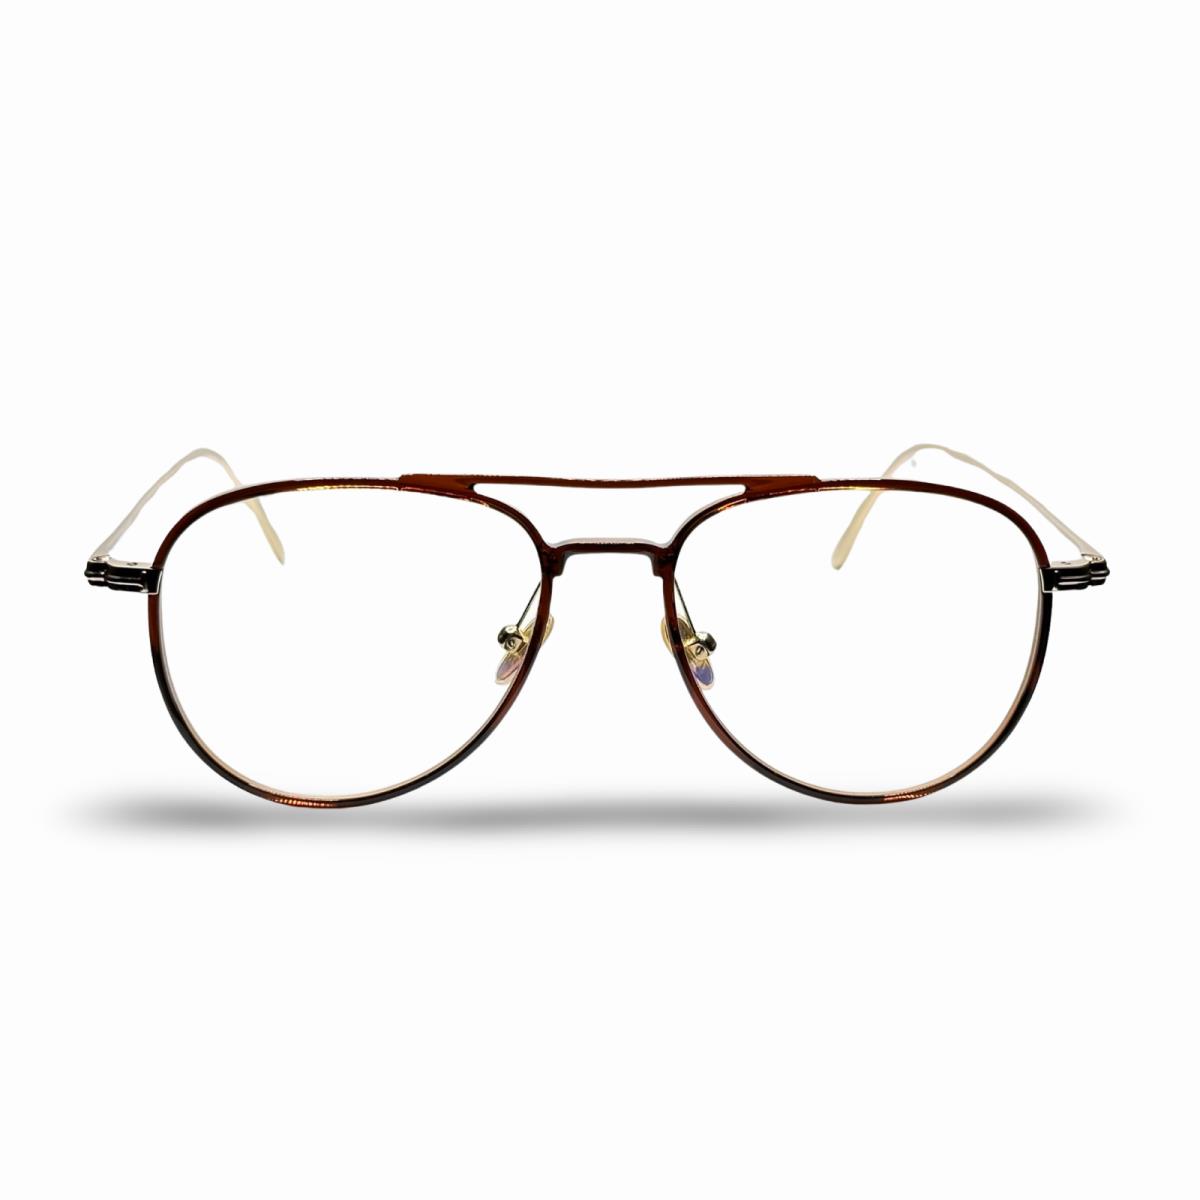 Tom Ford Designer Eyeglasses Brown / Gold Round Optical Frame Demo Lens TF5666-B - Frame: Brown